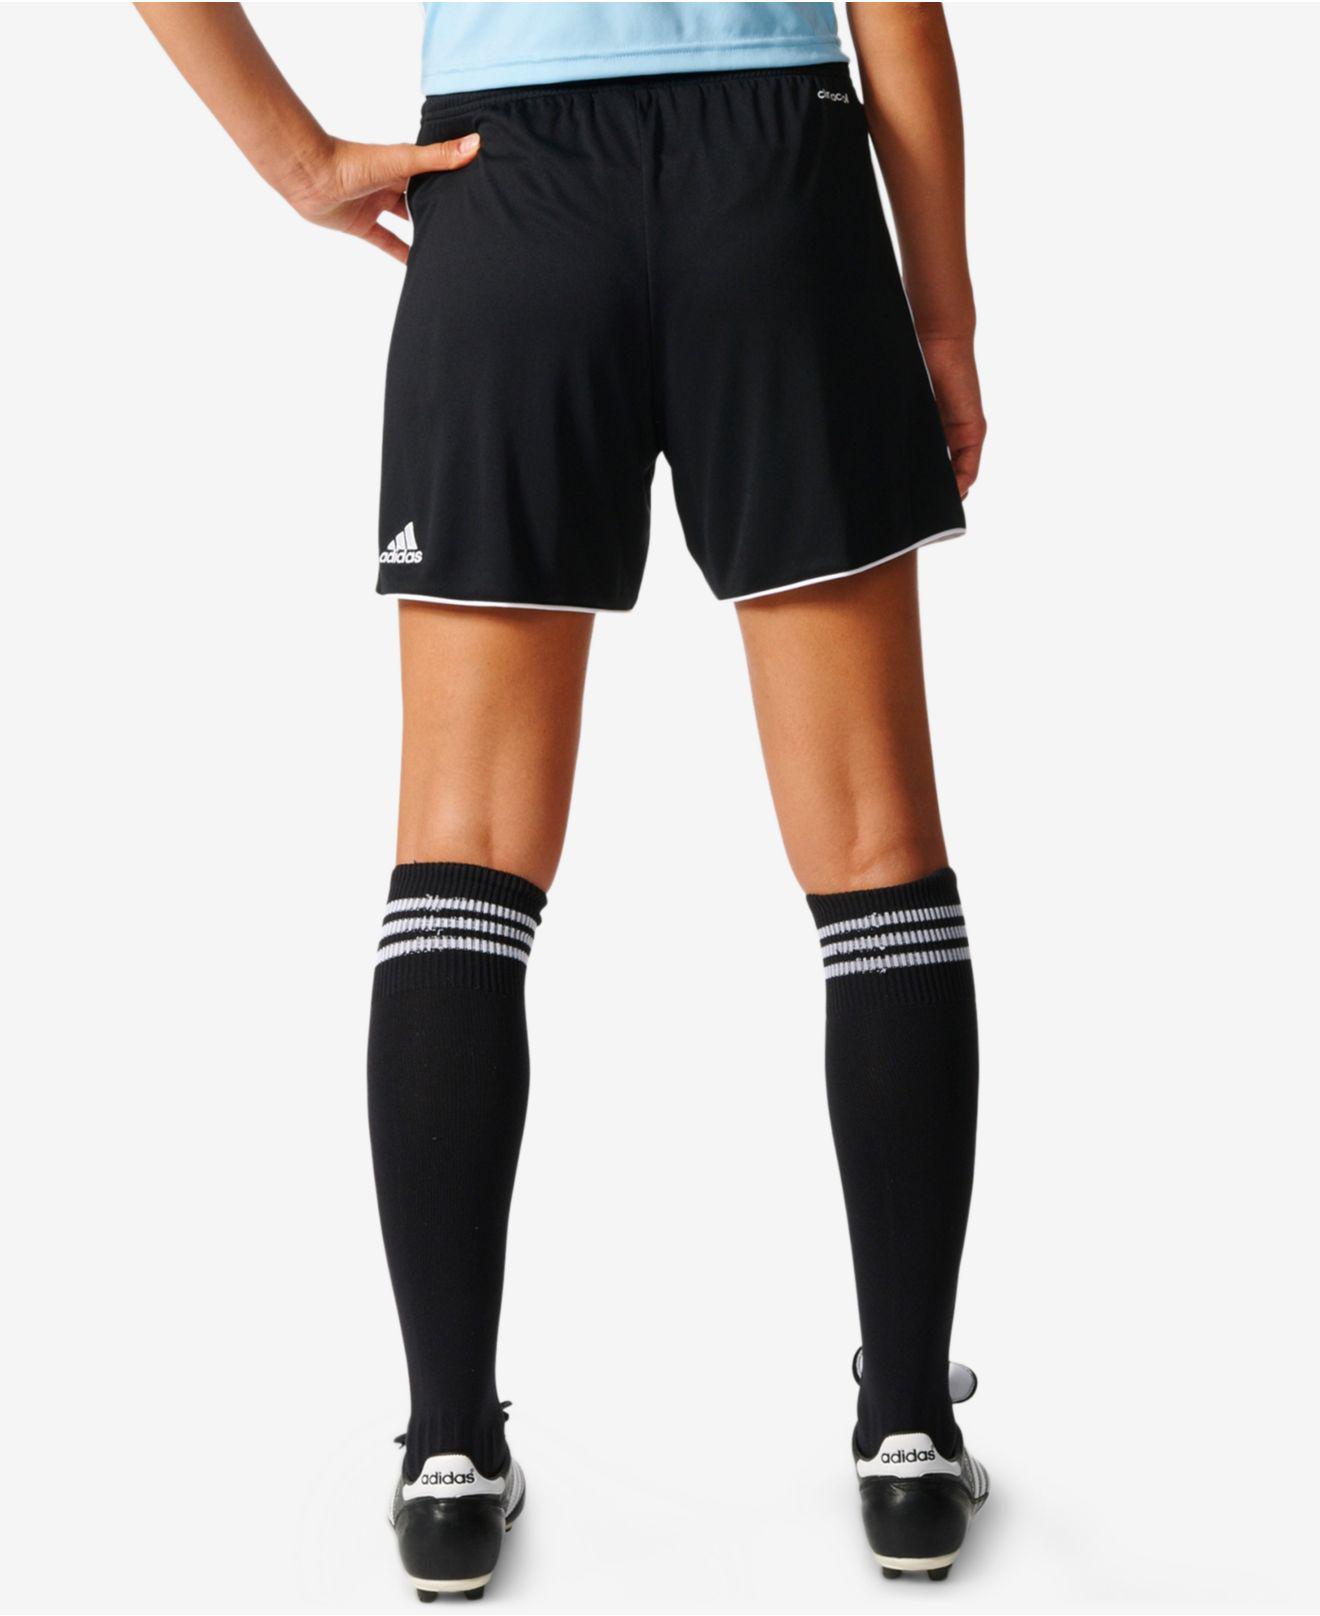 adidas climacool soccer shorts,OFF 68%,www.spltwenty20.com